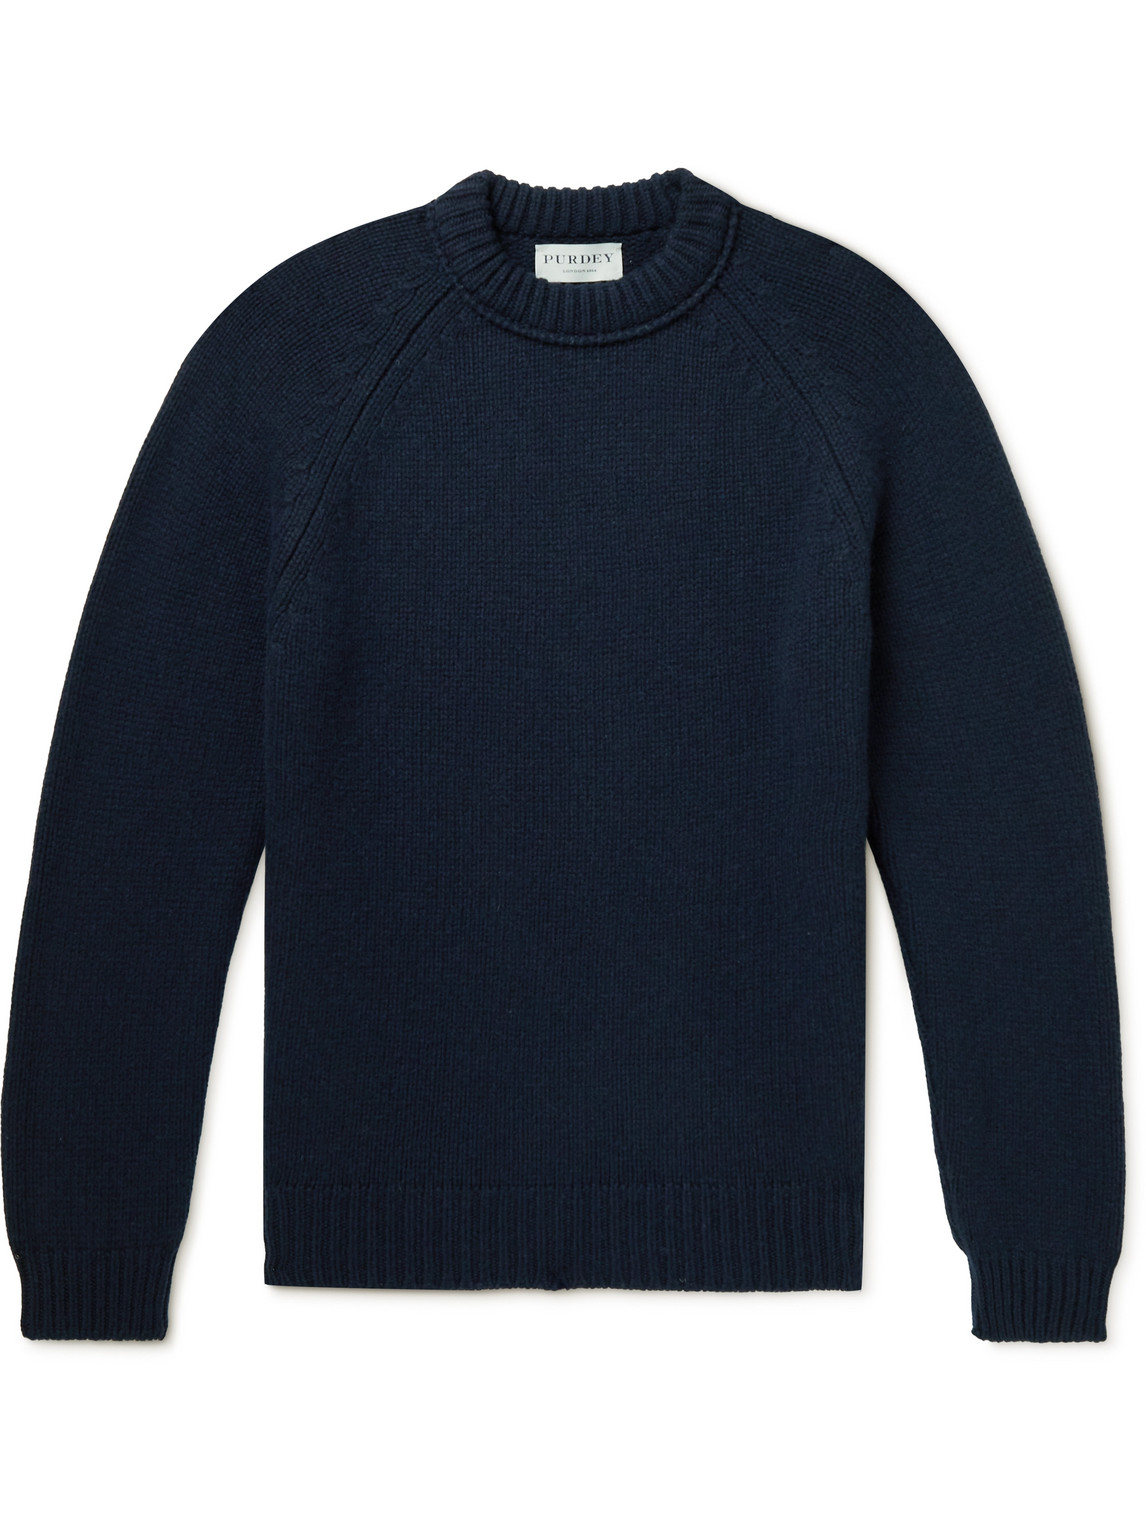 Purdey Cashmere Sweater In Blue | ModeSens